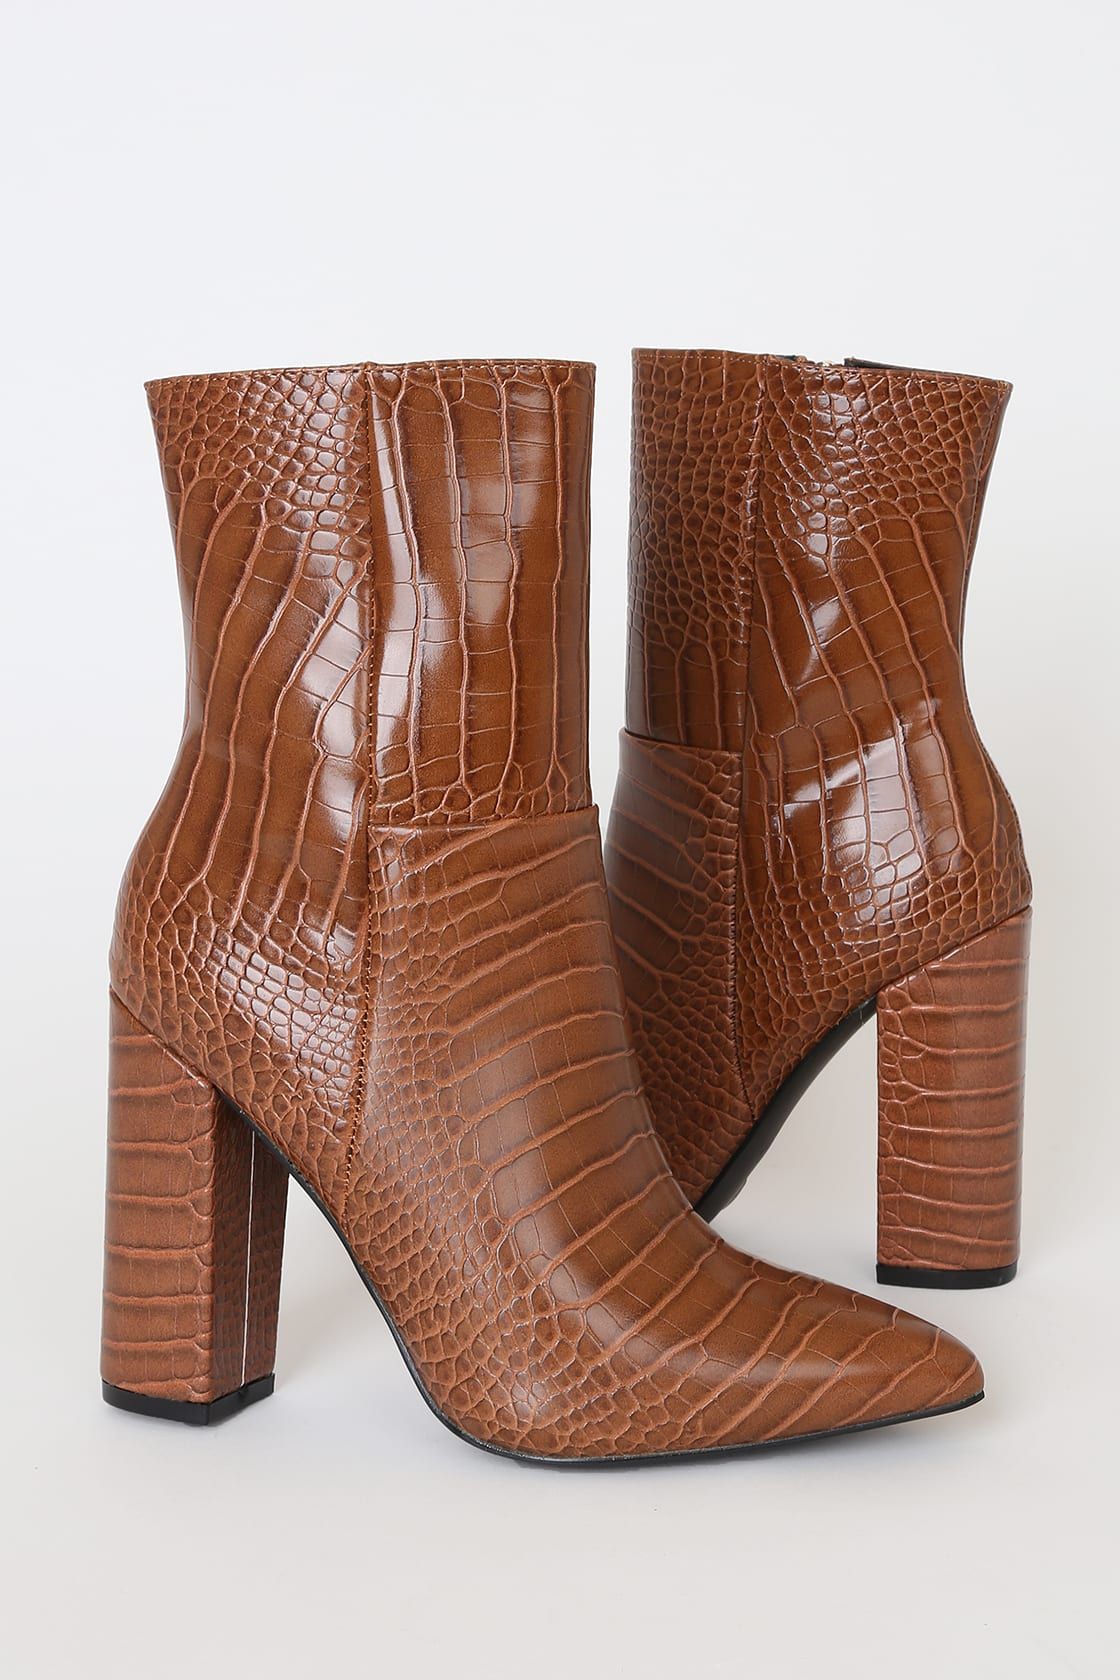 Dawson Tan Crocodile Pointed-Toe Mid Calf Boots | Lulus (US)